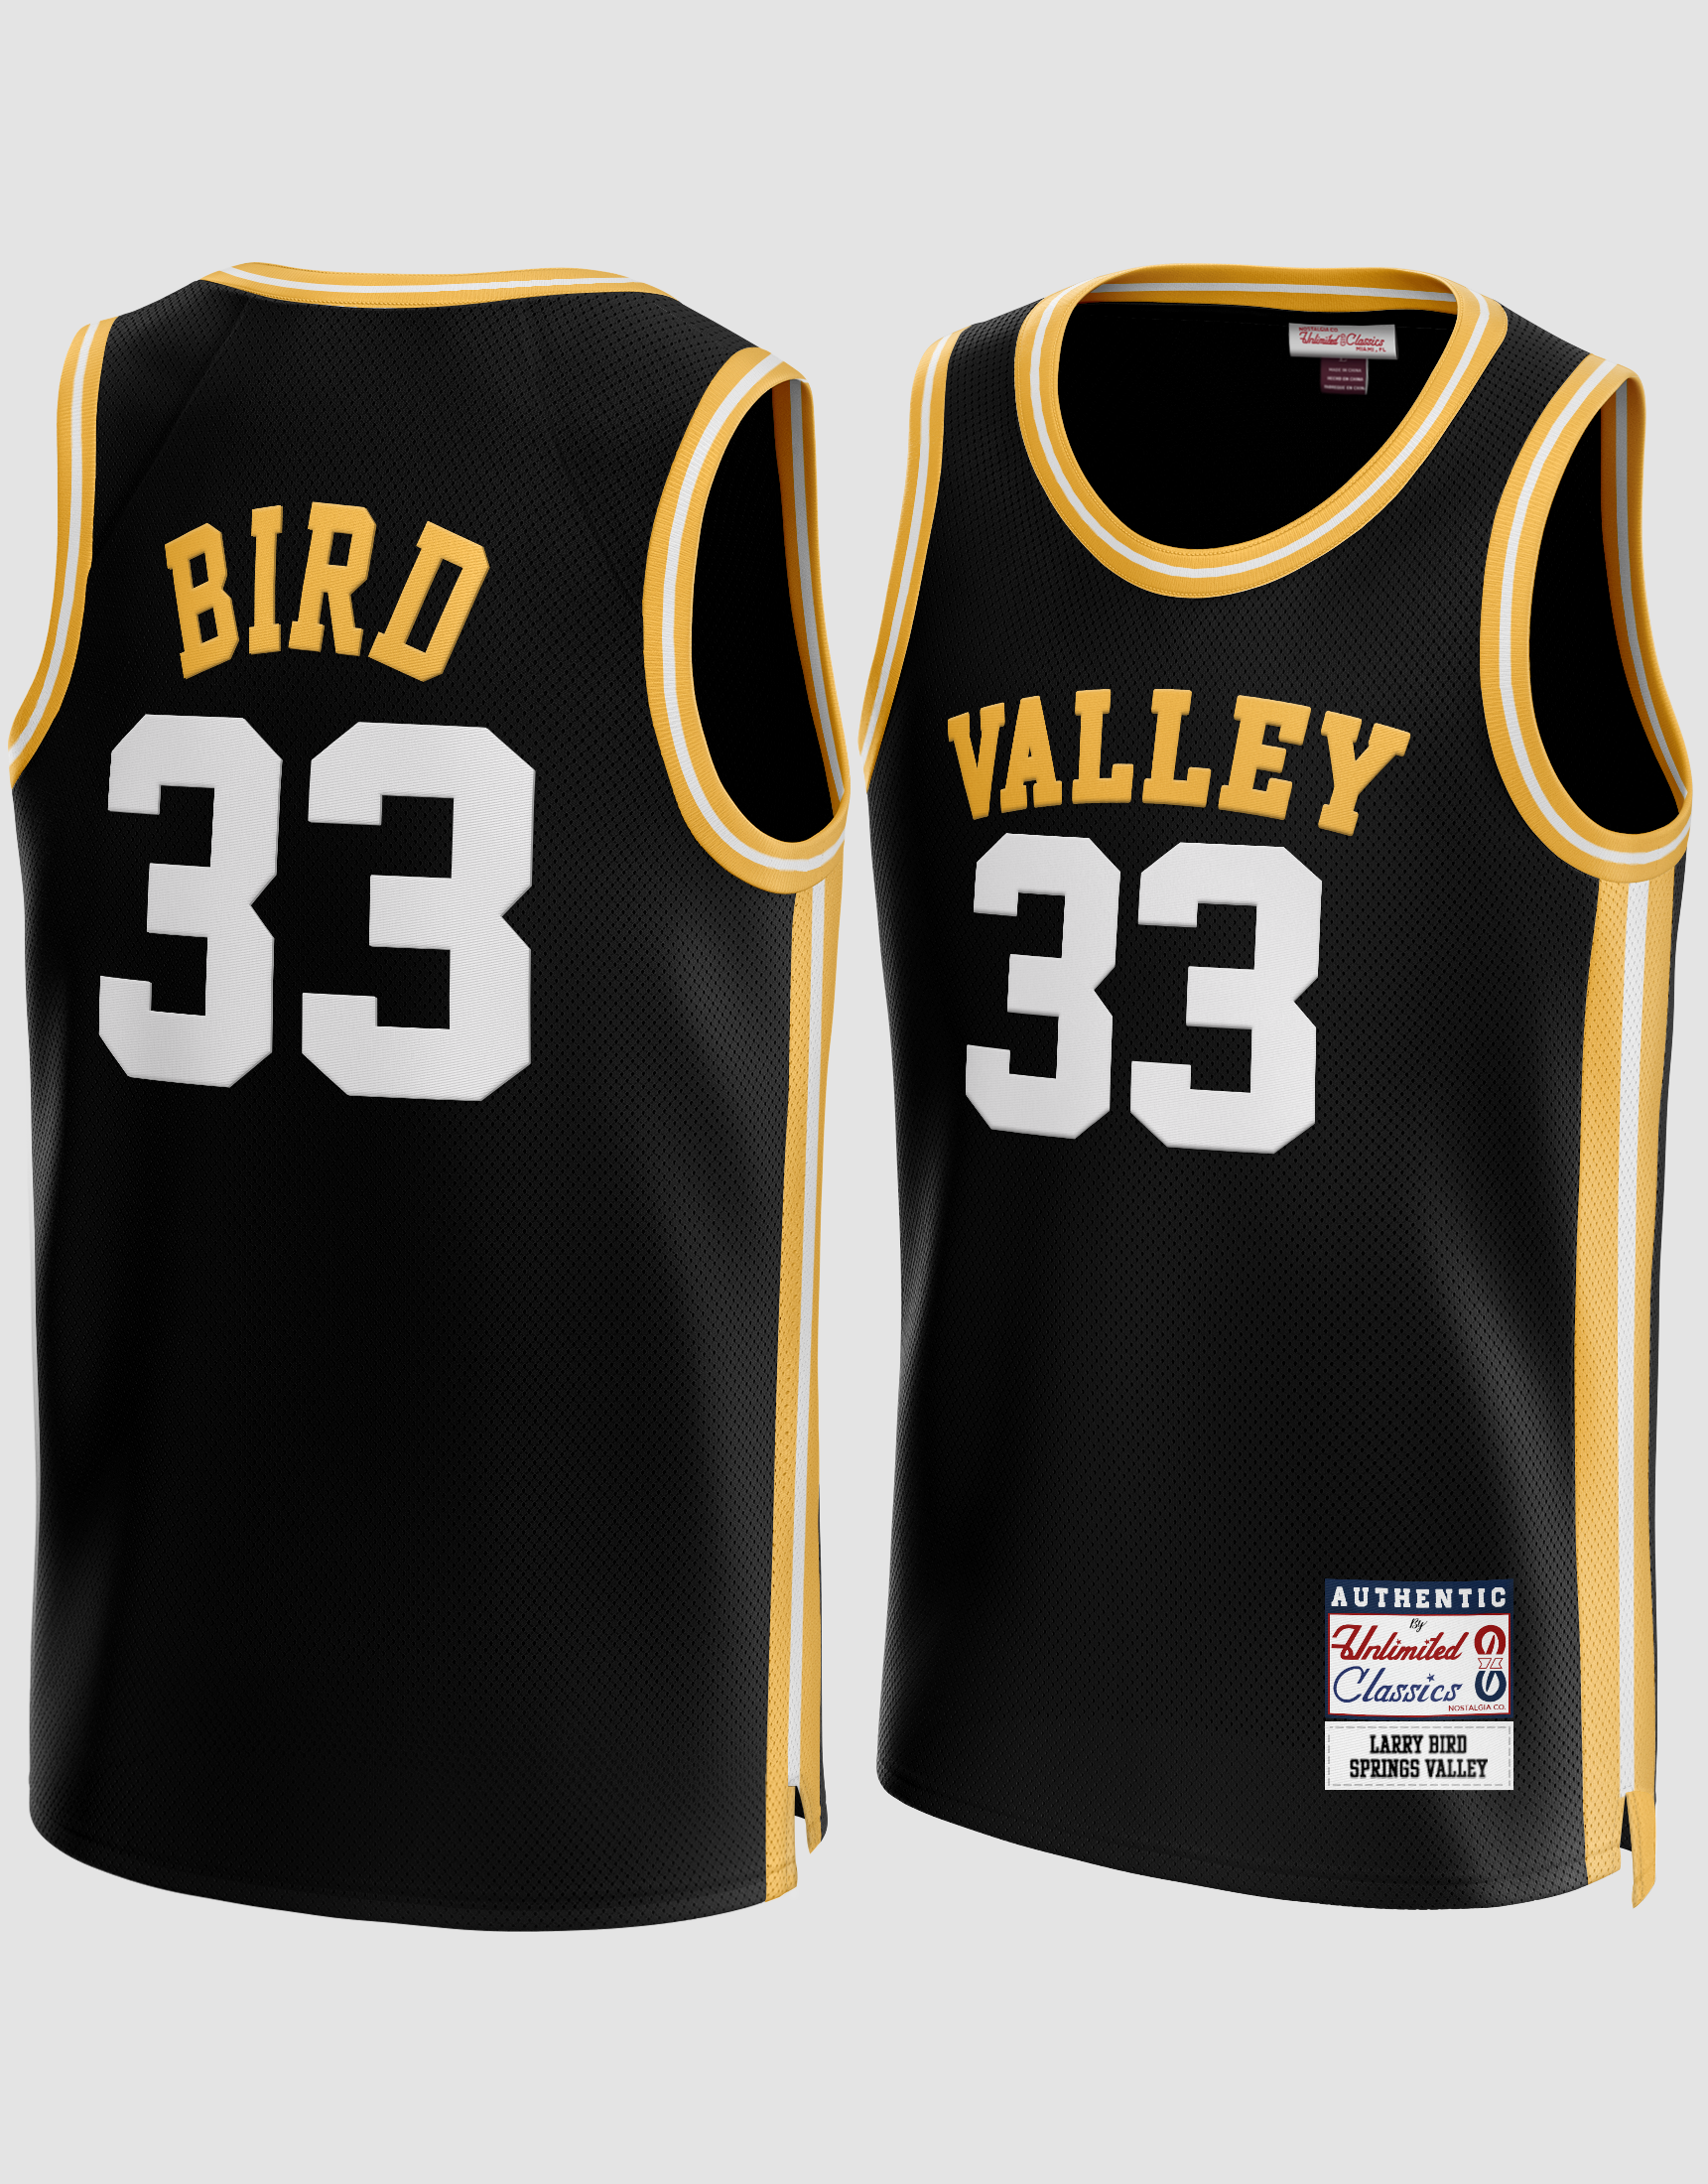 Larry Bird USA White and Gold Basketball Jersey